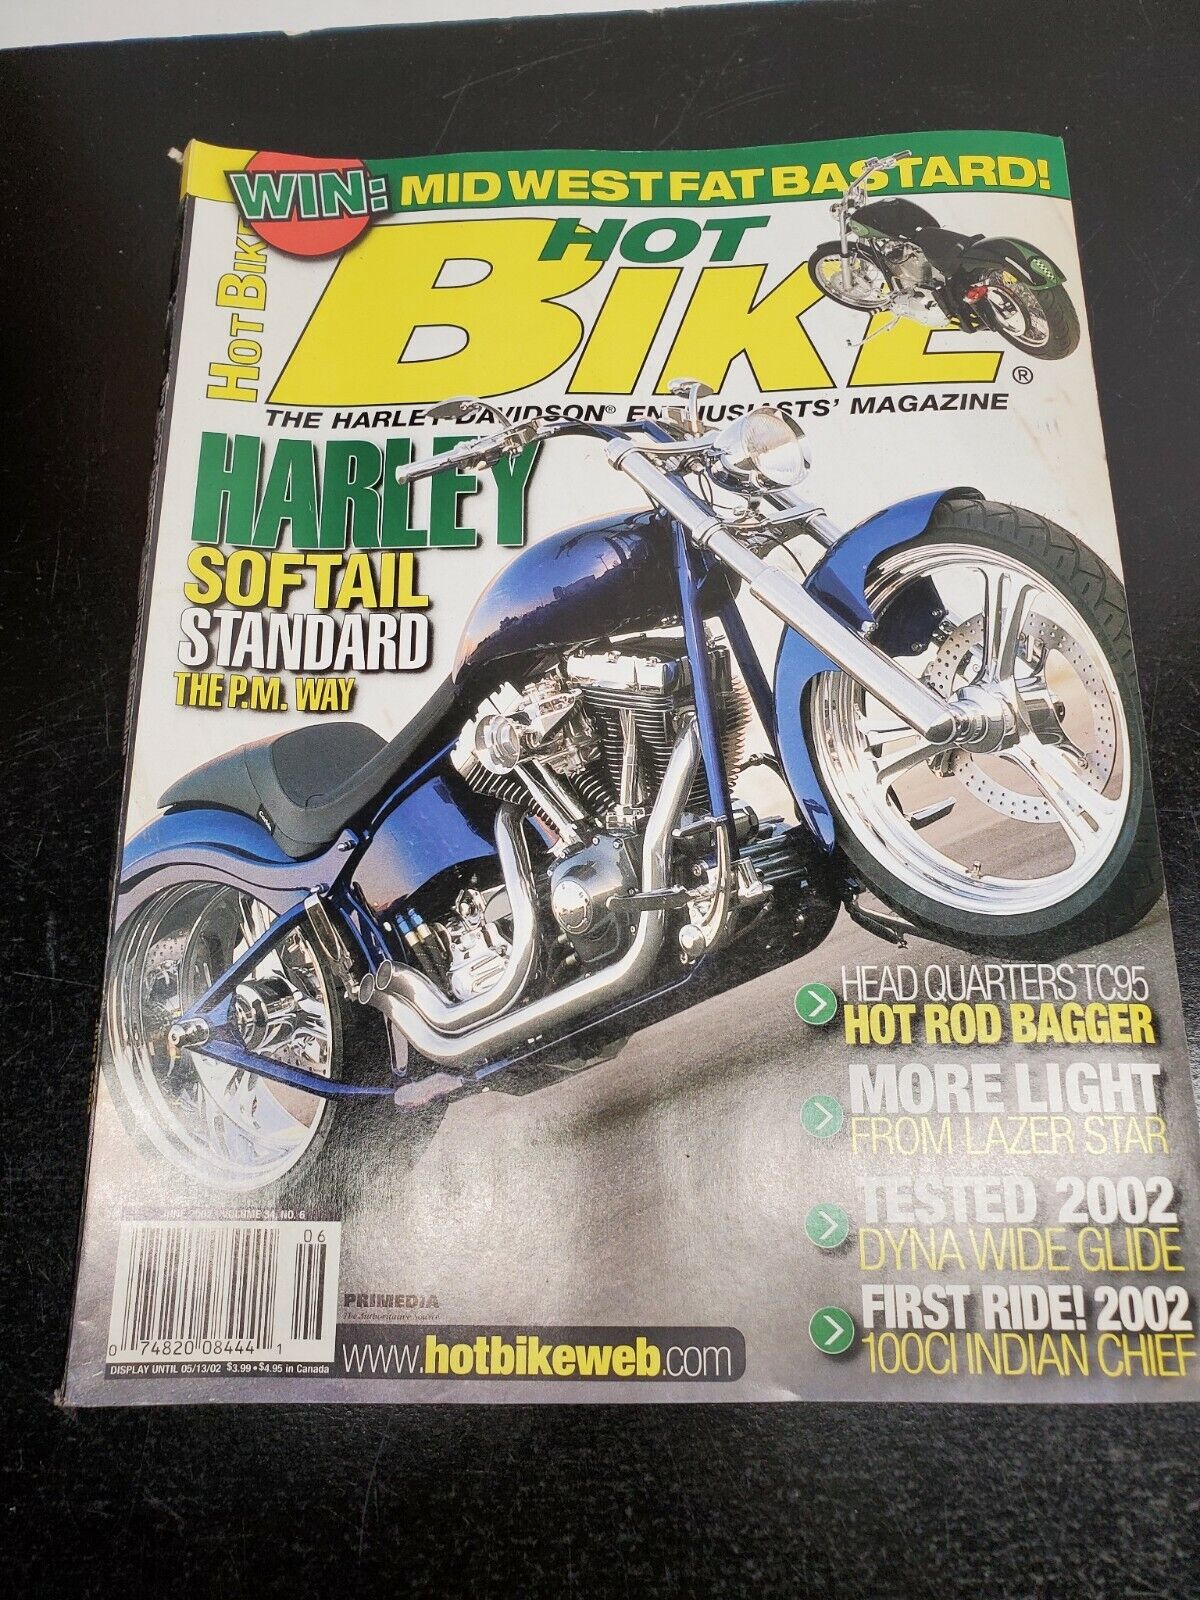 Hot Bike magazine - The Harley-Davidson Enthusist's Magazine -...